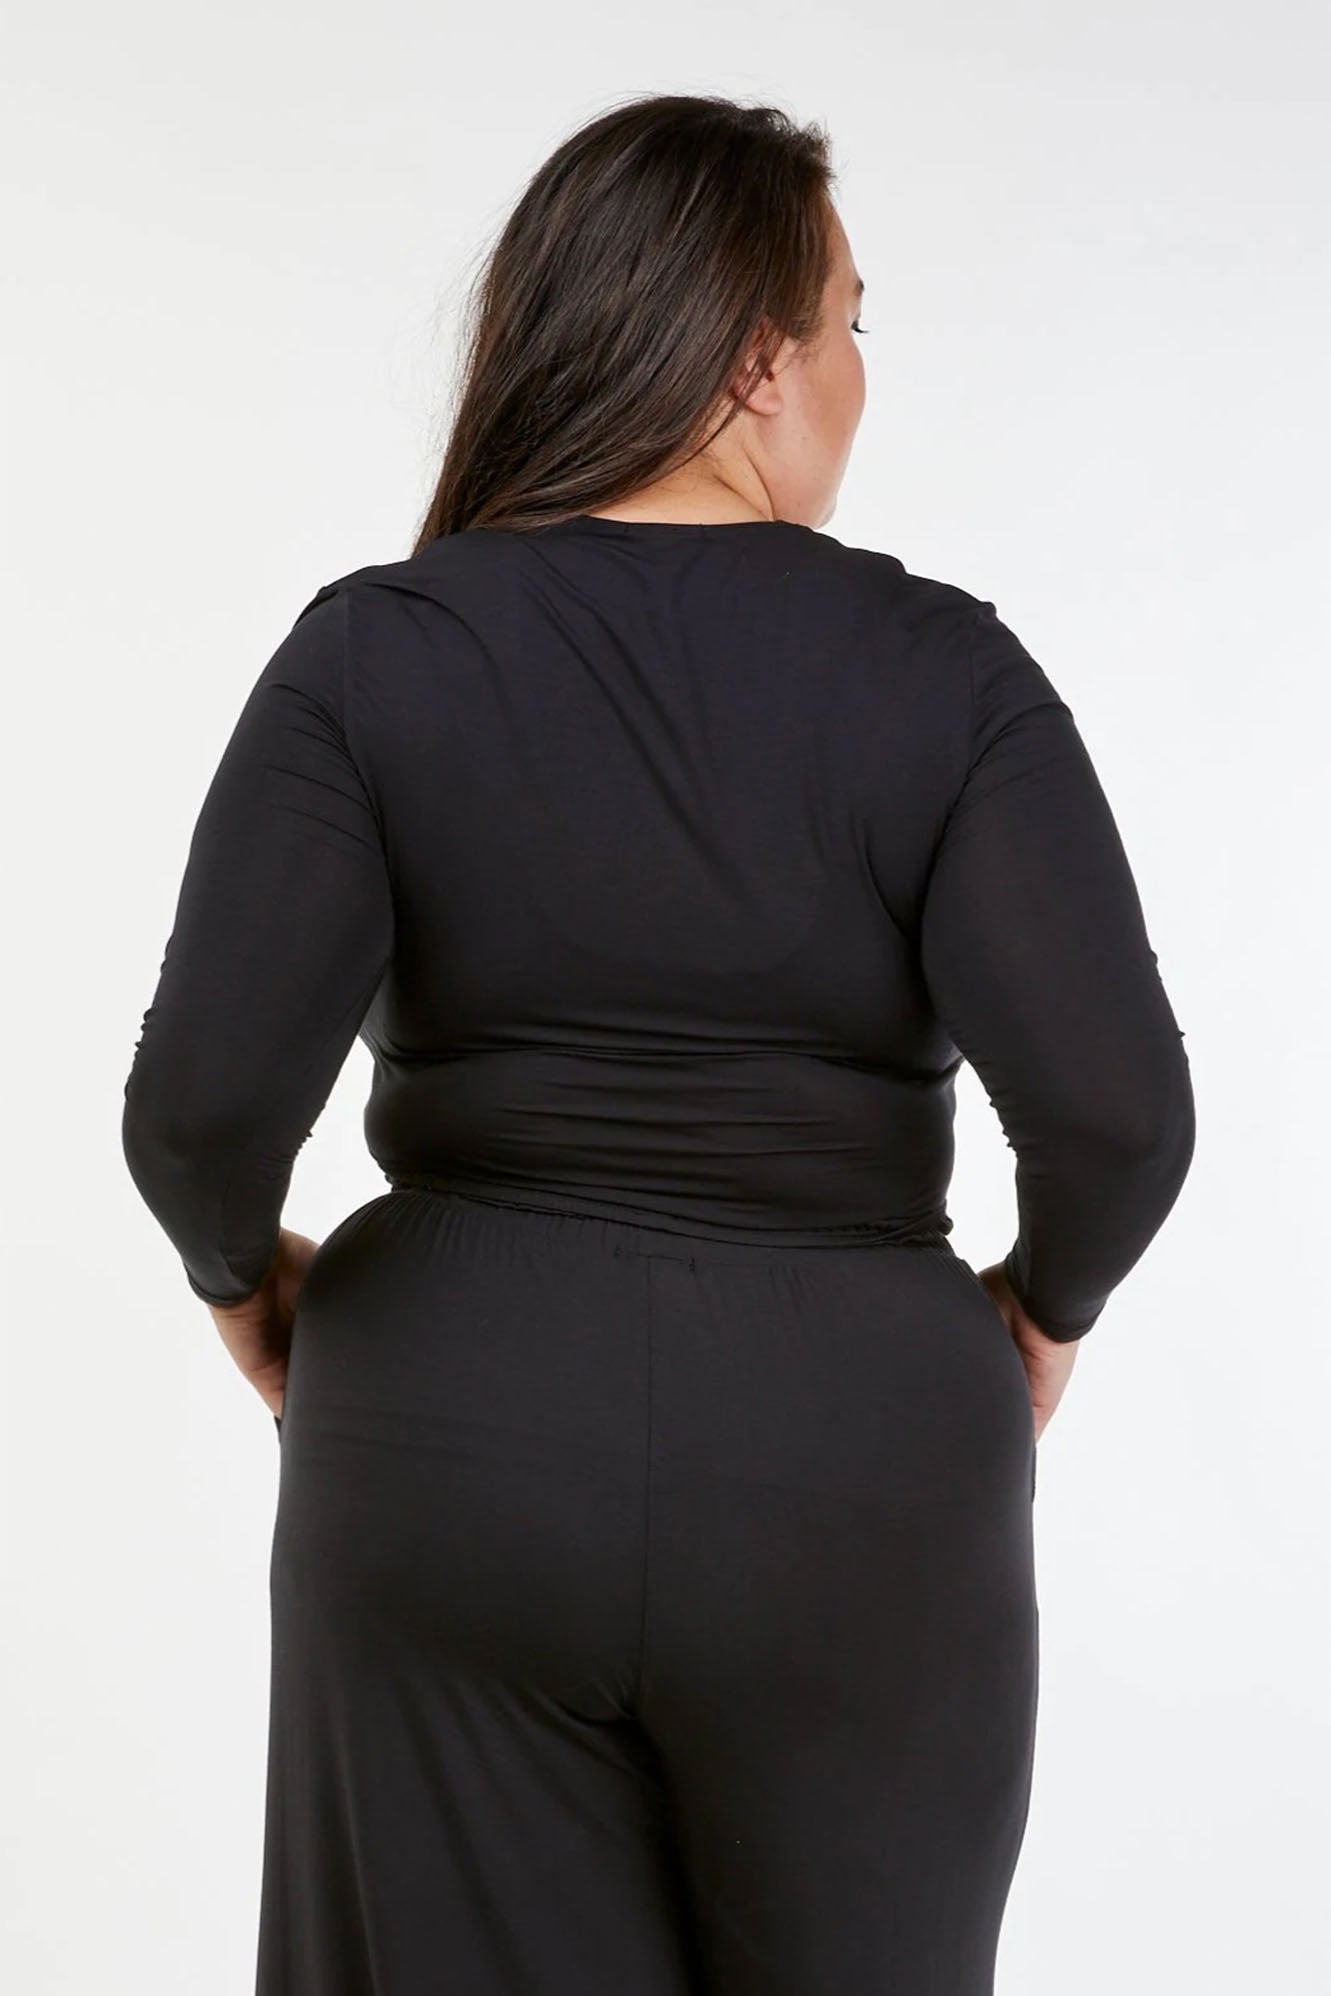 Woman wearing Black Tani Long Sleeve Scoop Neck Tee 79350 back view